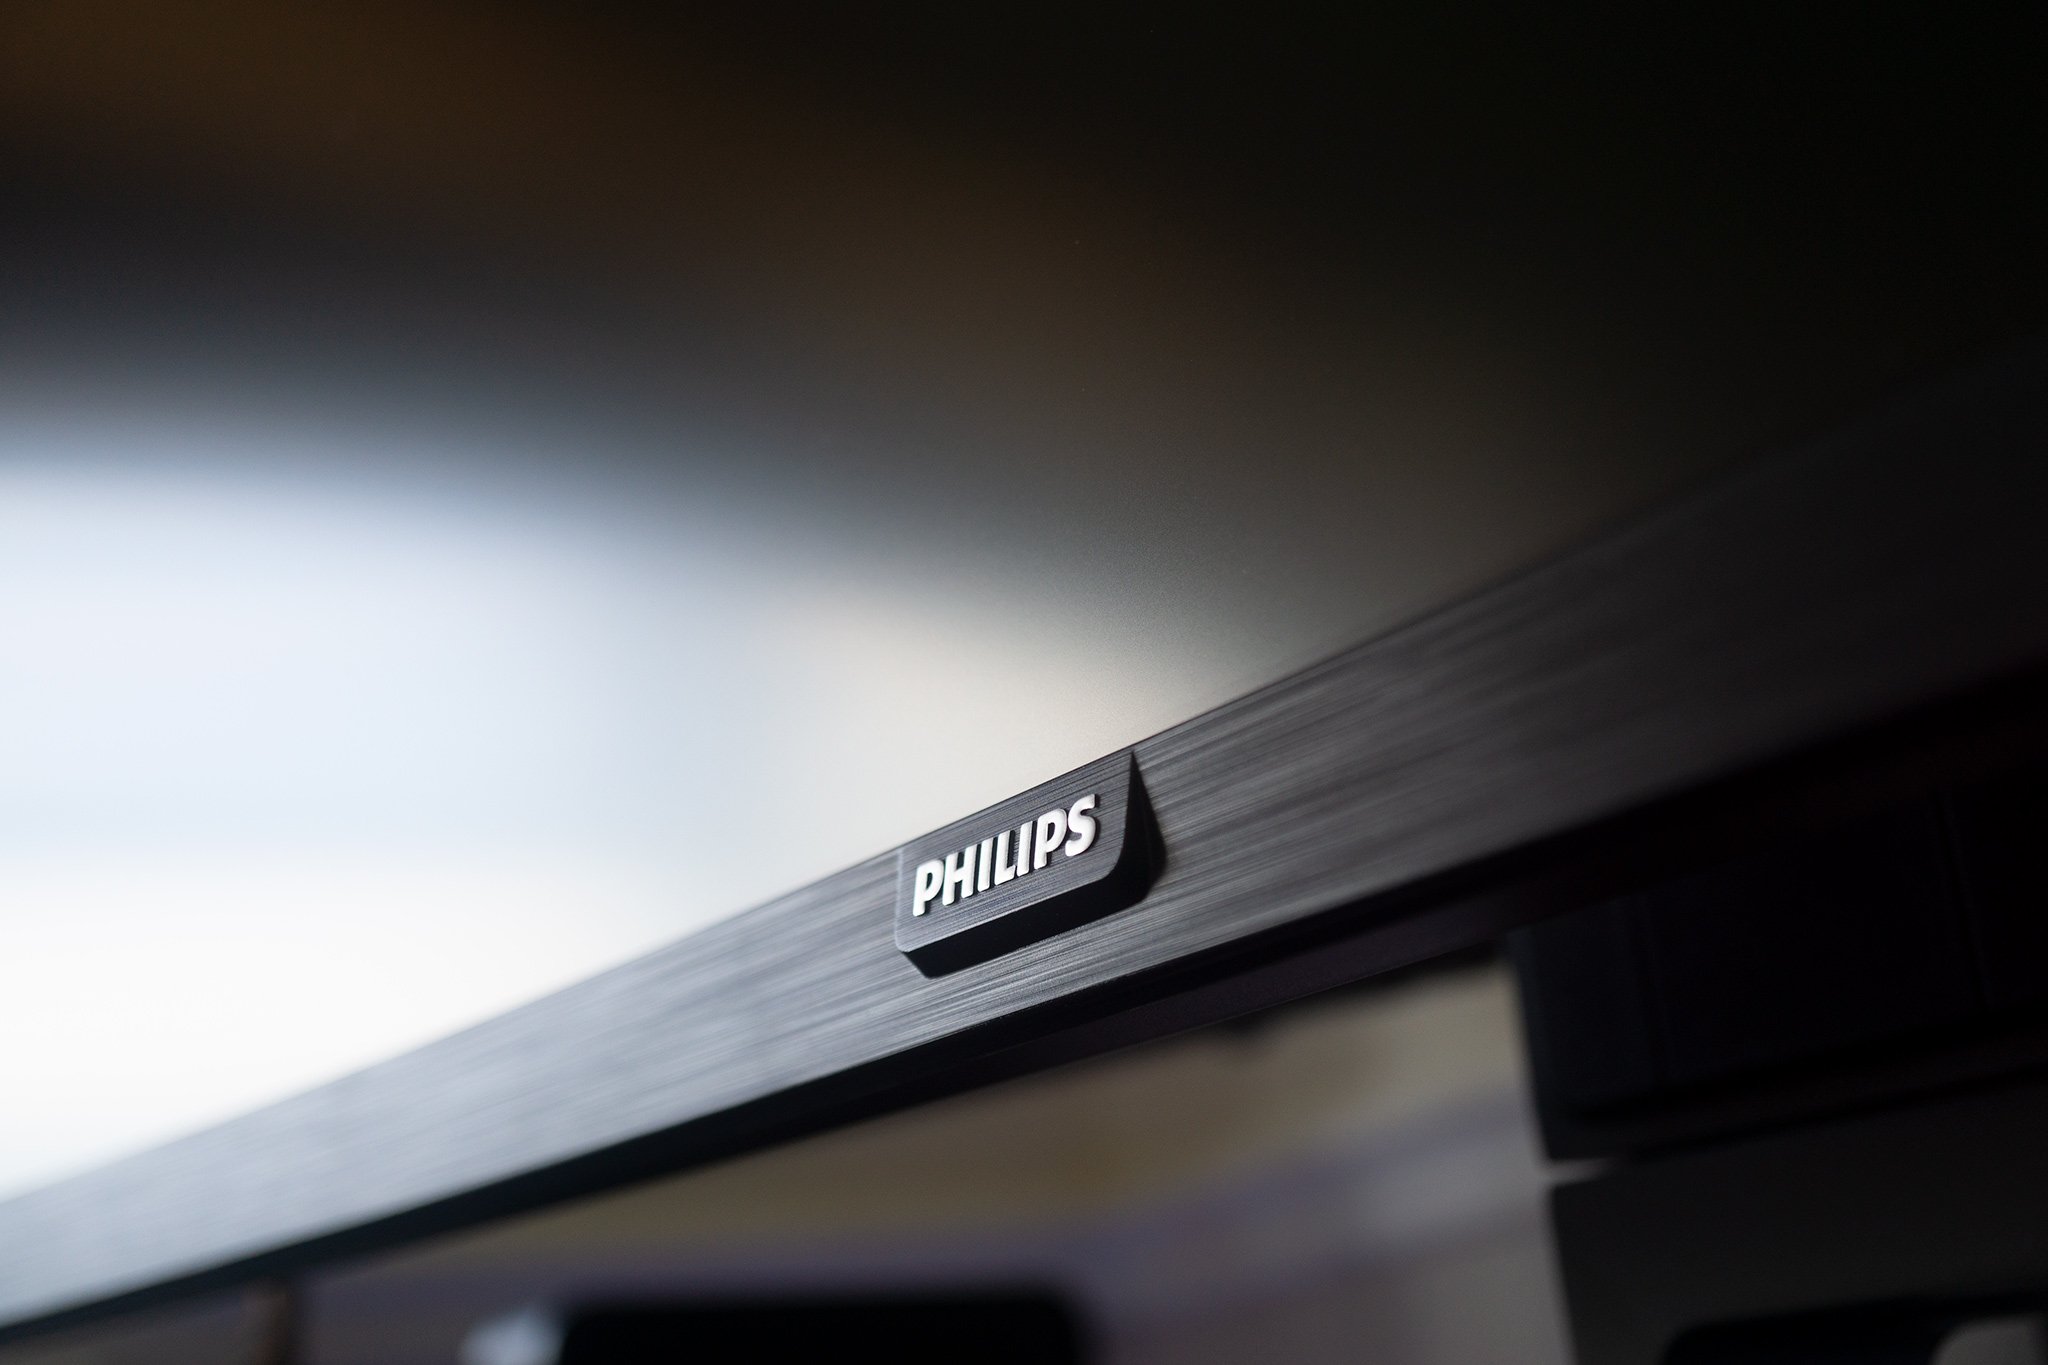 Philips 499P9H